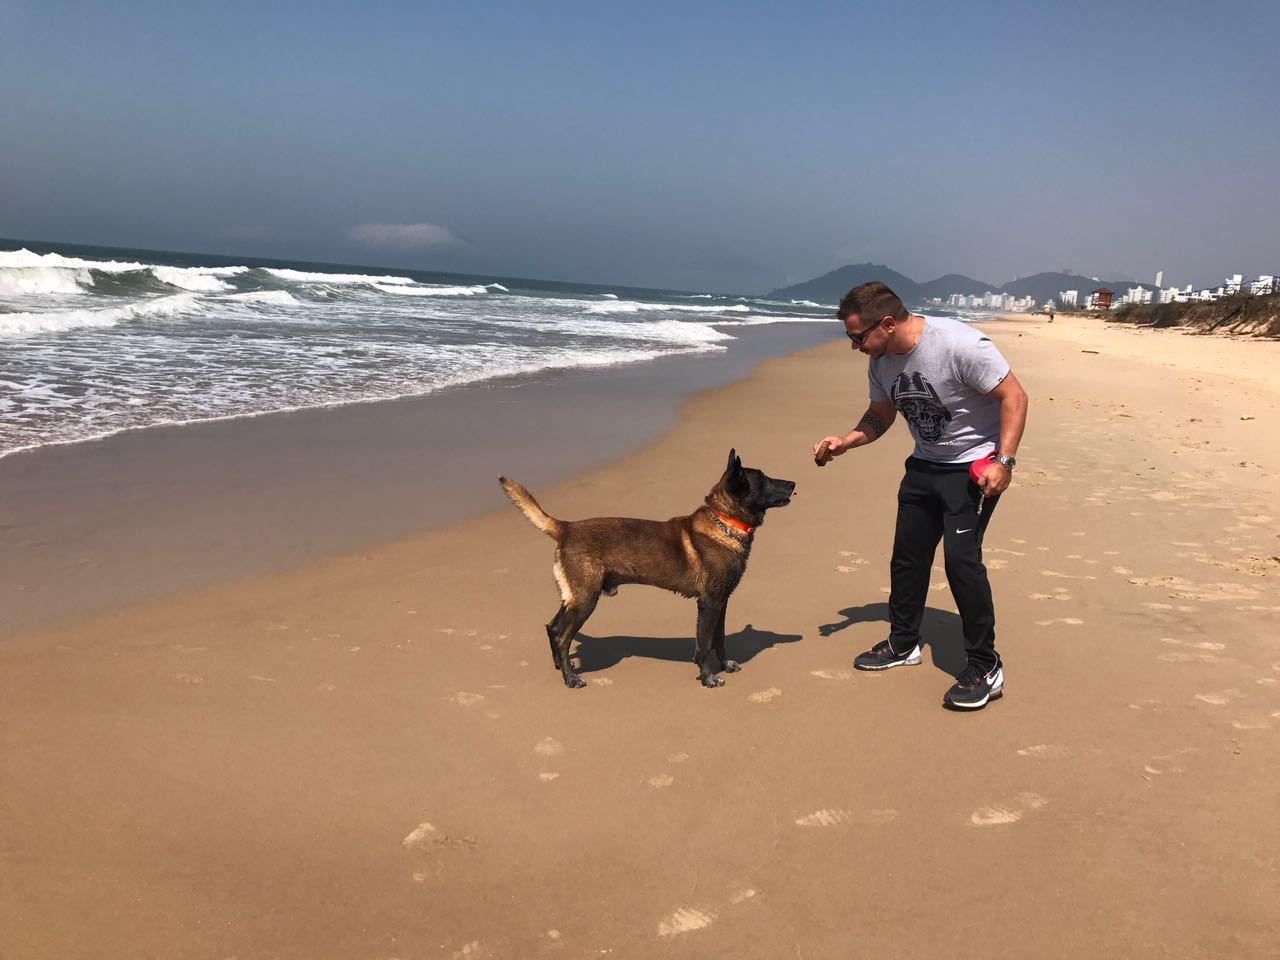 2017.Agosto - Yackson de Villalazan, pausa pra refrescar na Praia Brava, Itajaí-SC, após visita ao veterinário.